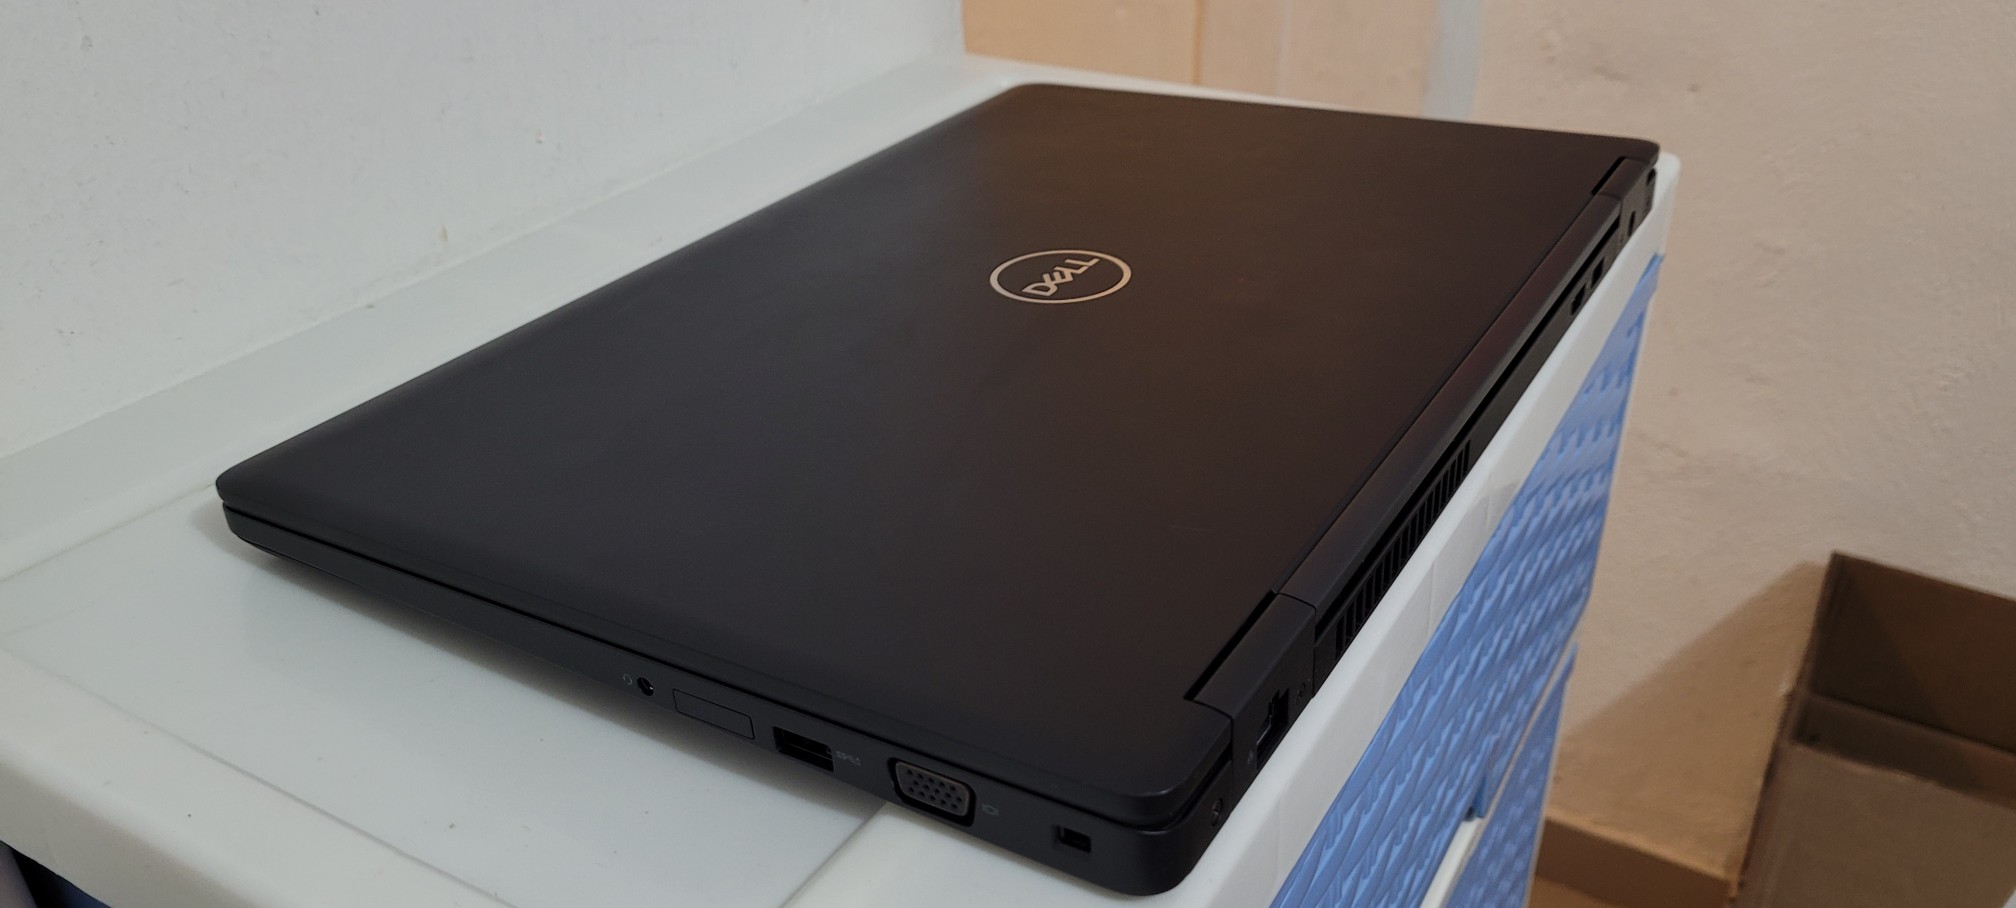 computadoras y laptops - Laptop Dell 5570 17 Pulg Core i7 Ram 16gb DDR4 Disco 512GB Doble Video Grafico 2